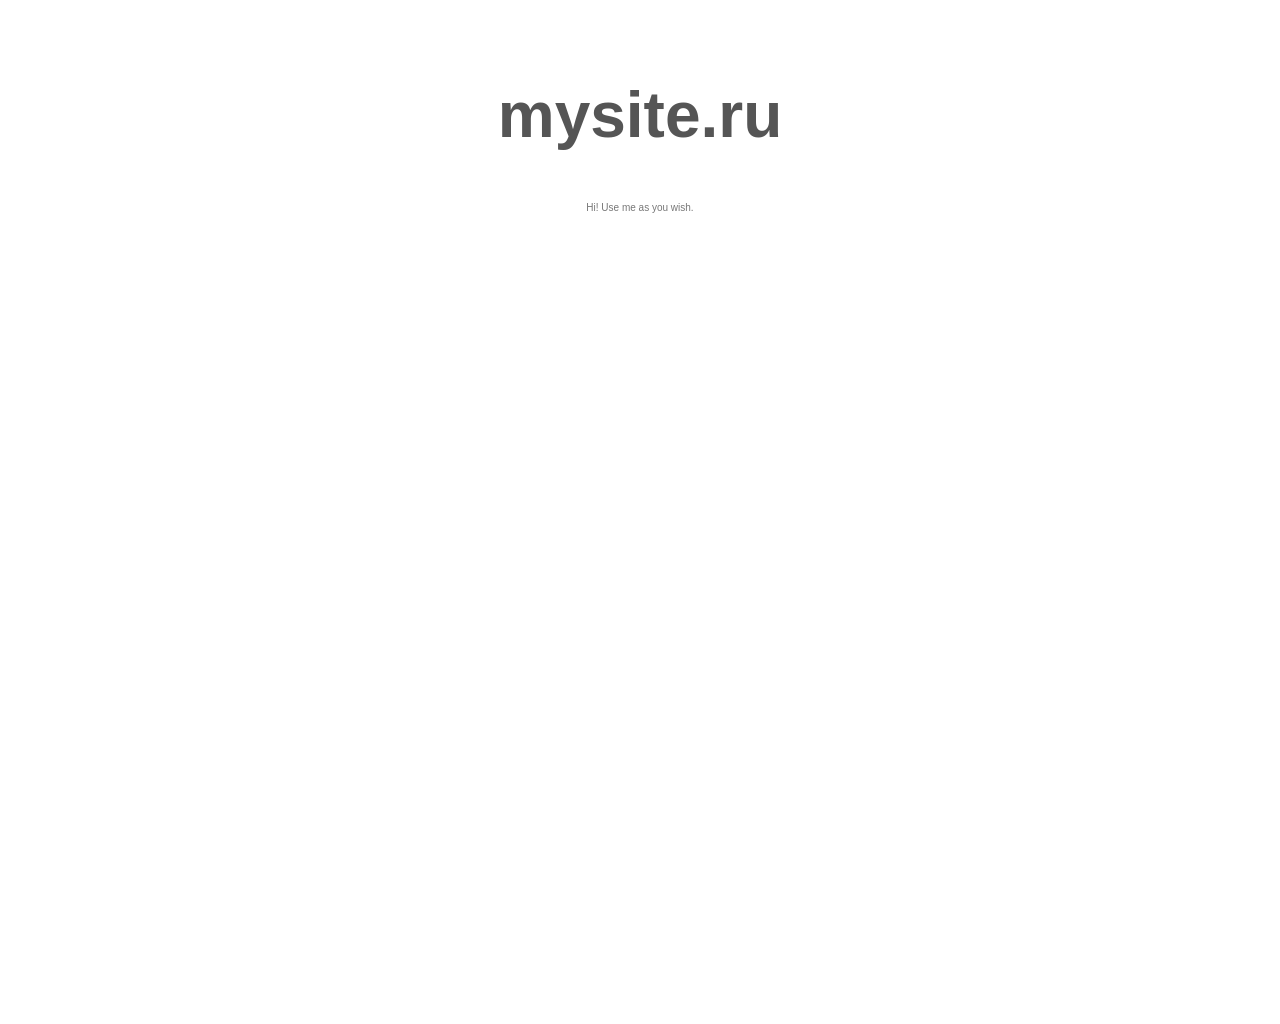 mysite.ru